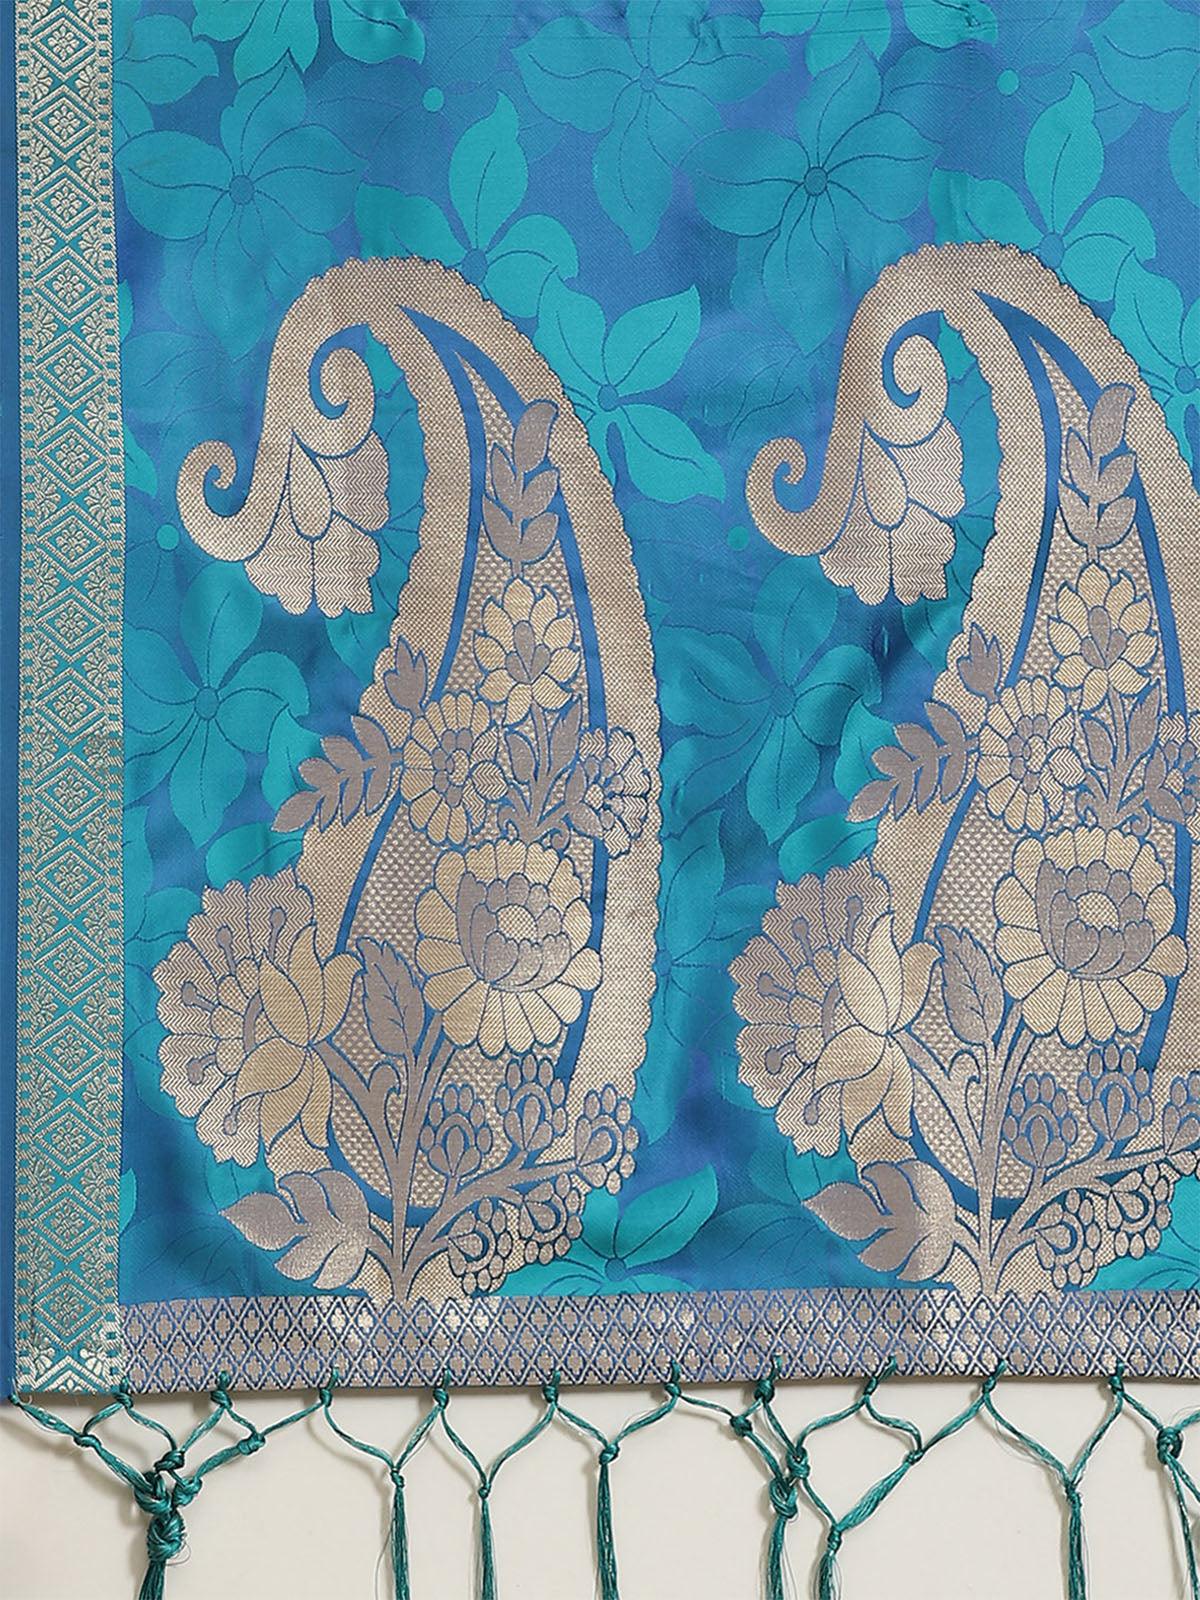 Blue Festive Pure Satin Woven Saree With Unstitched Blouse - Odette